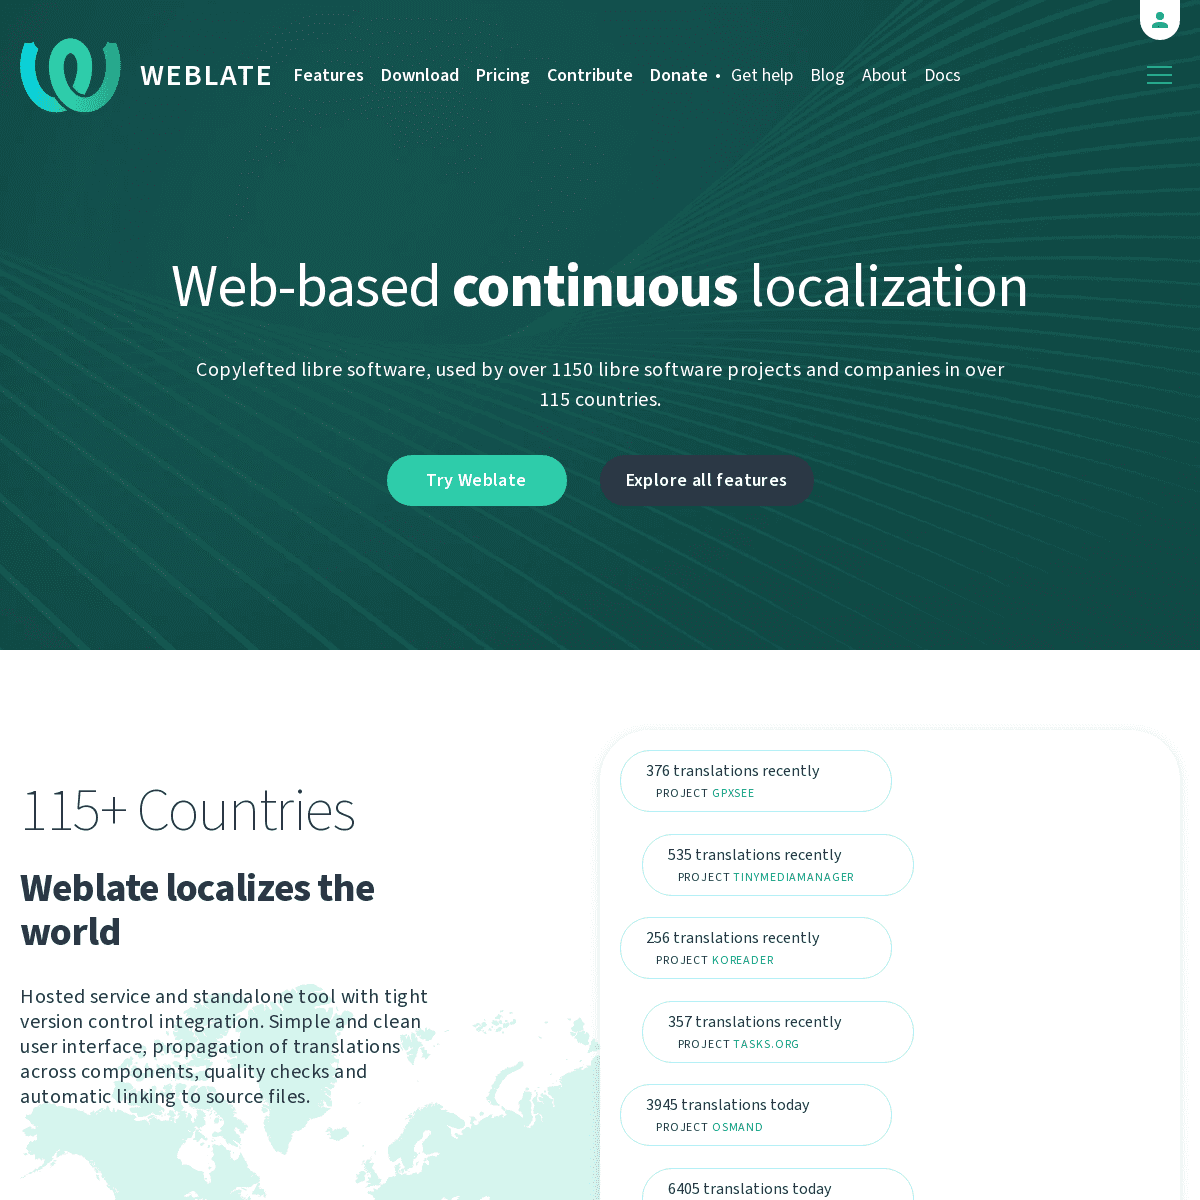 A complete backup of weblate.org